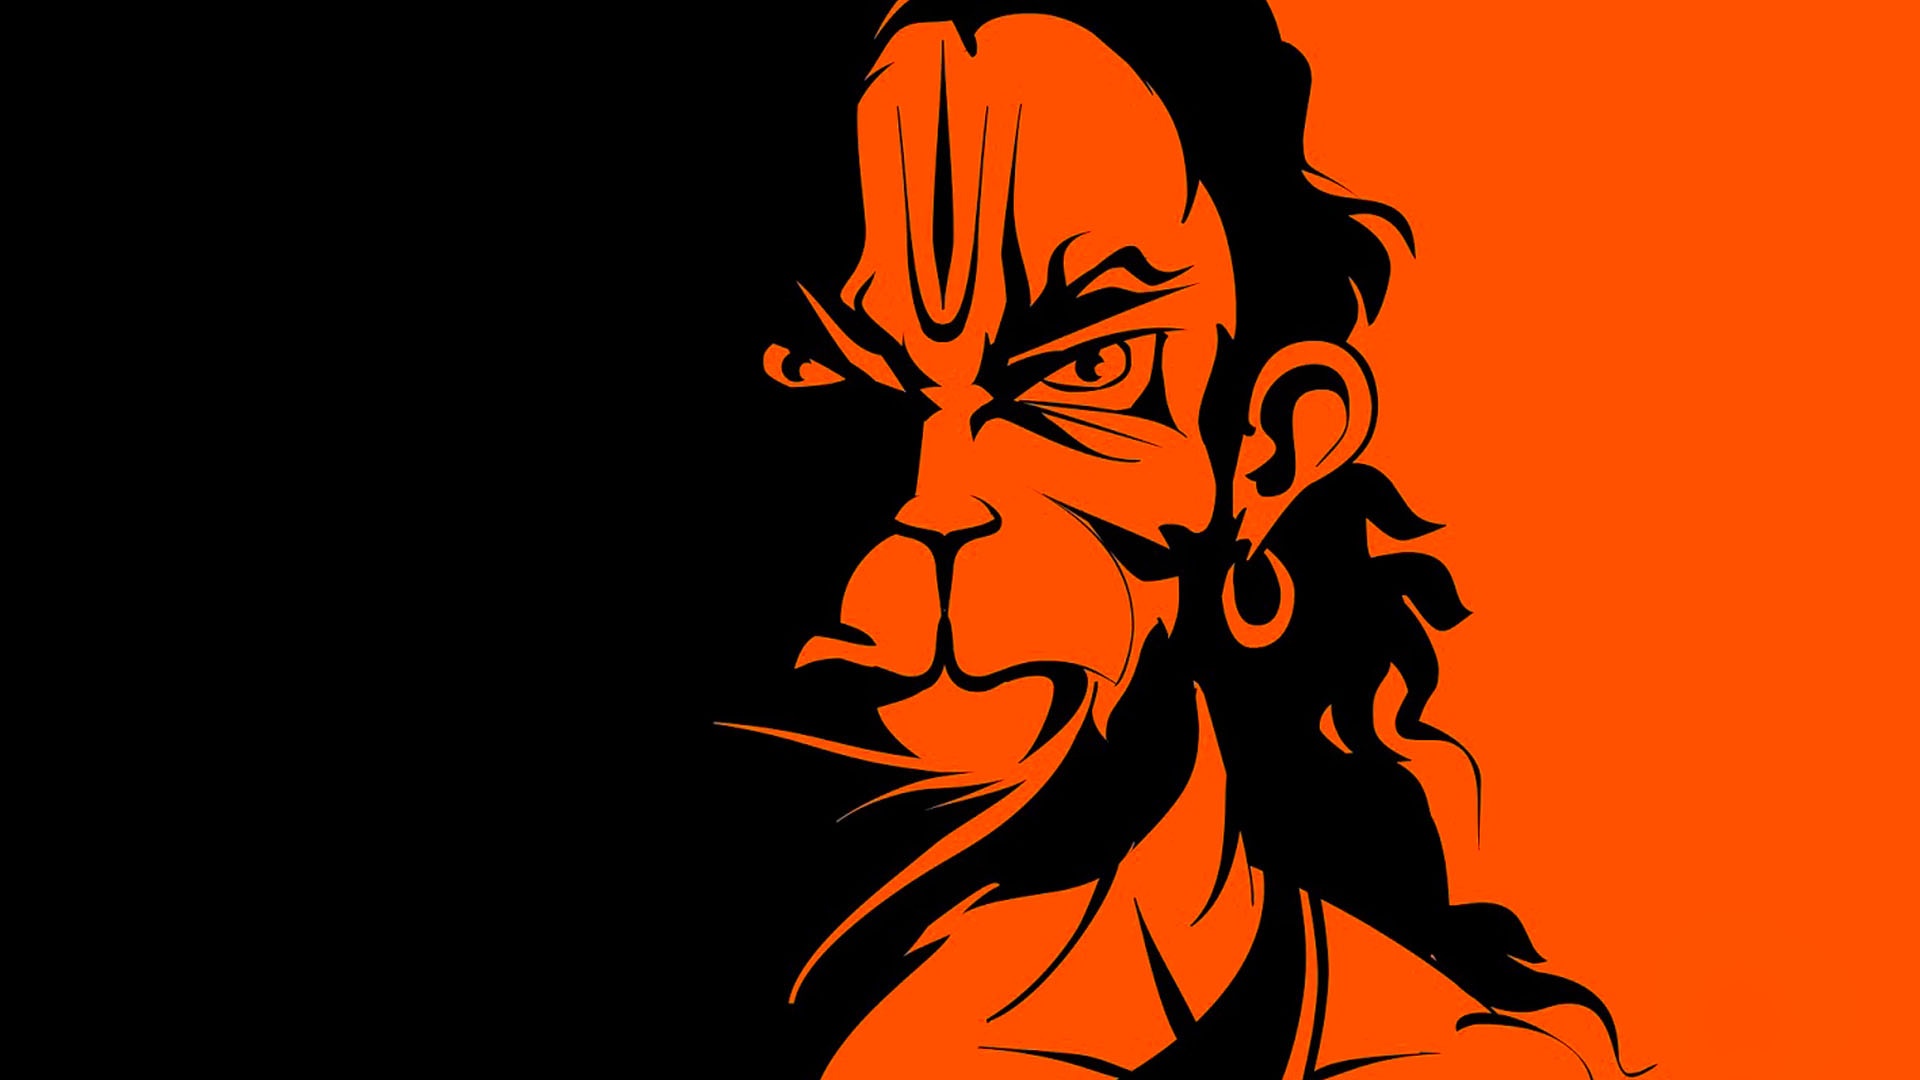 Download Wallpaper Hd Hanuman Ji Pictures